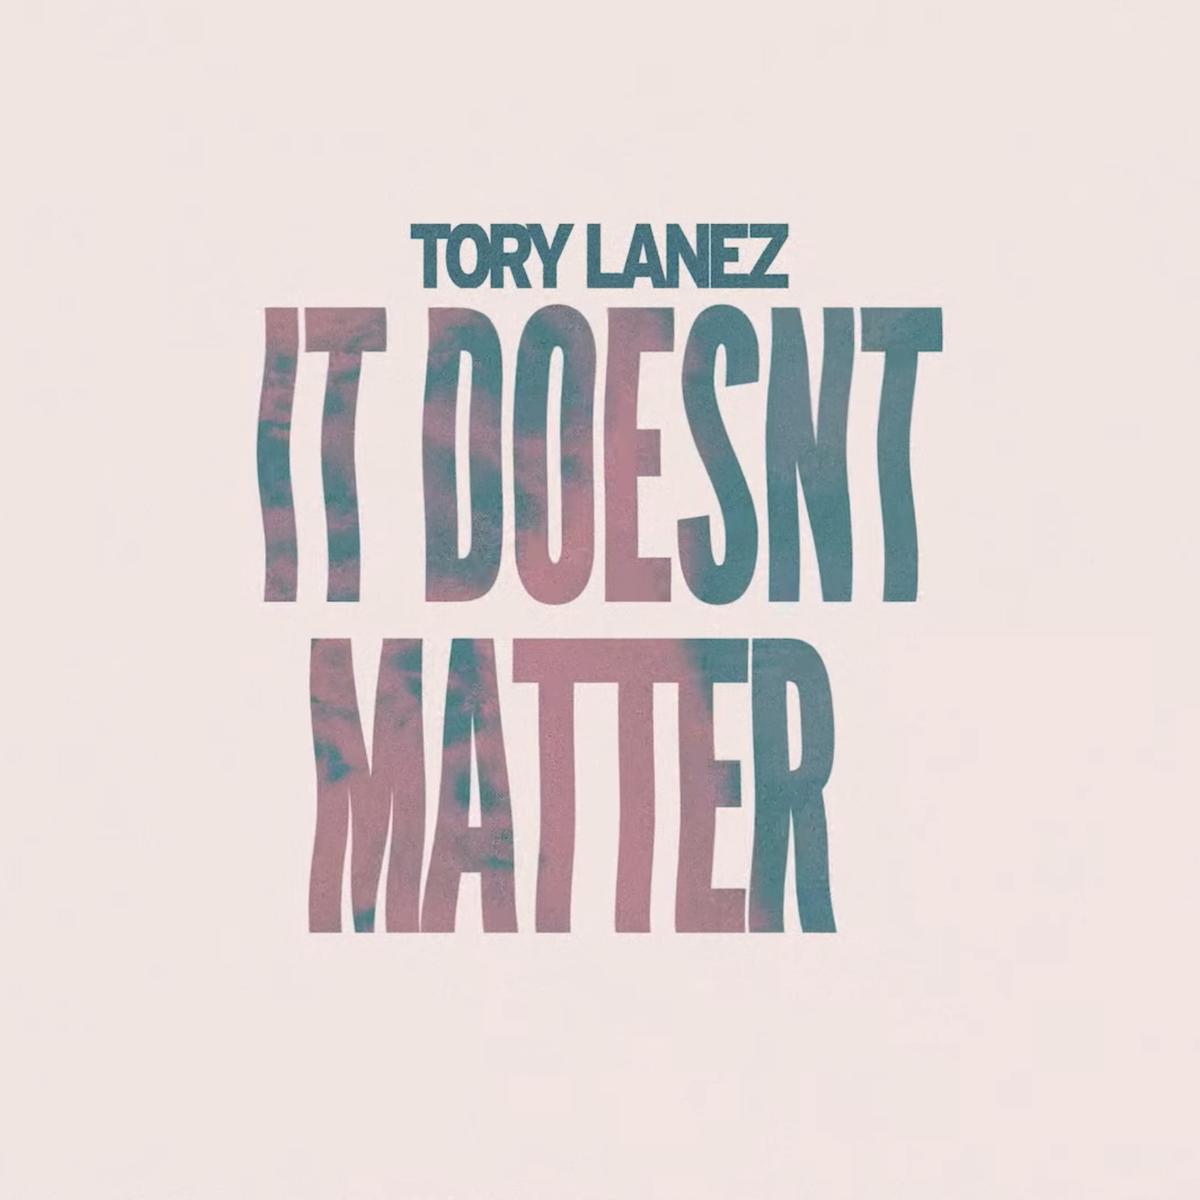 Tory Lanez – “It Doesn’t Matter” [Audio]